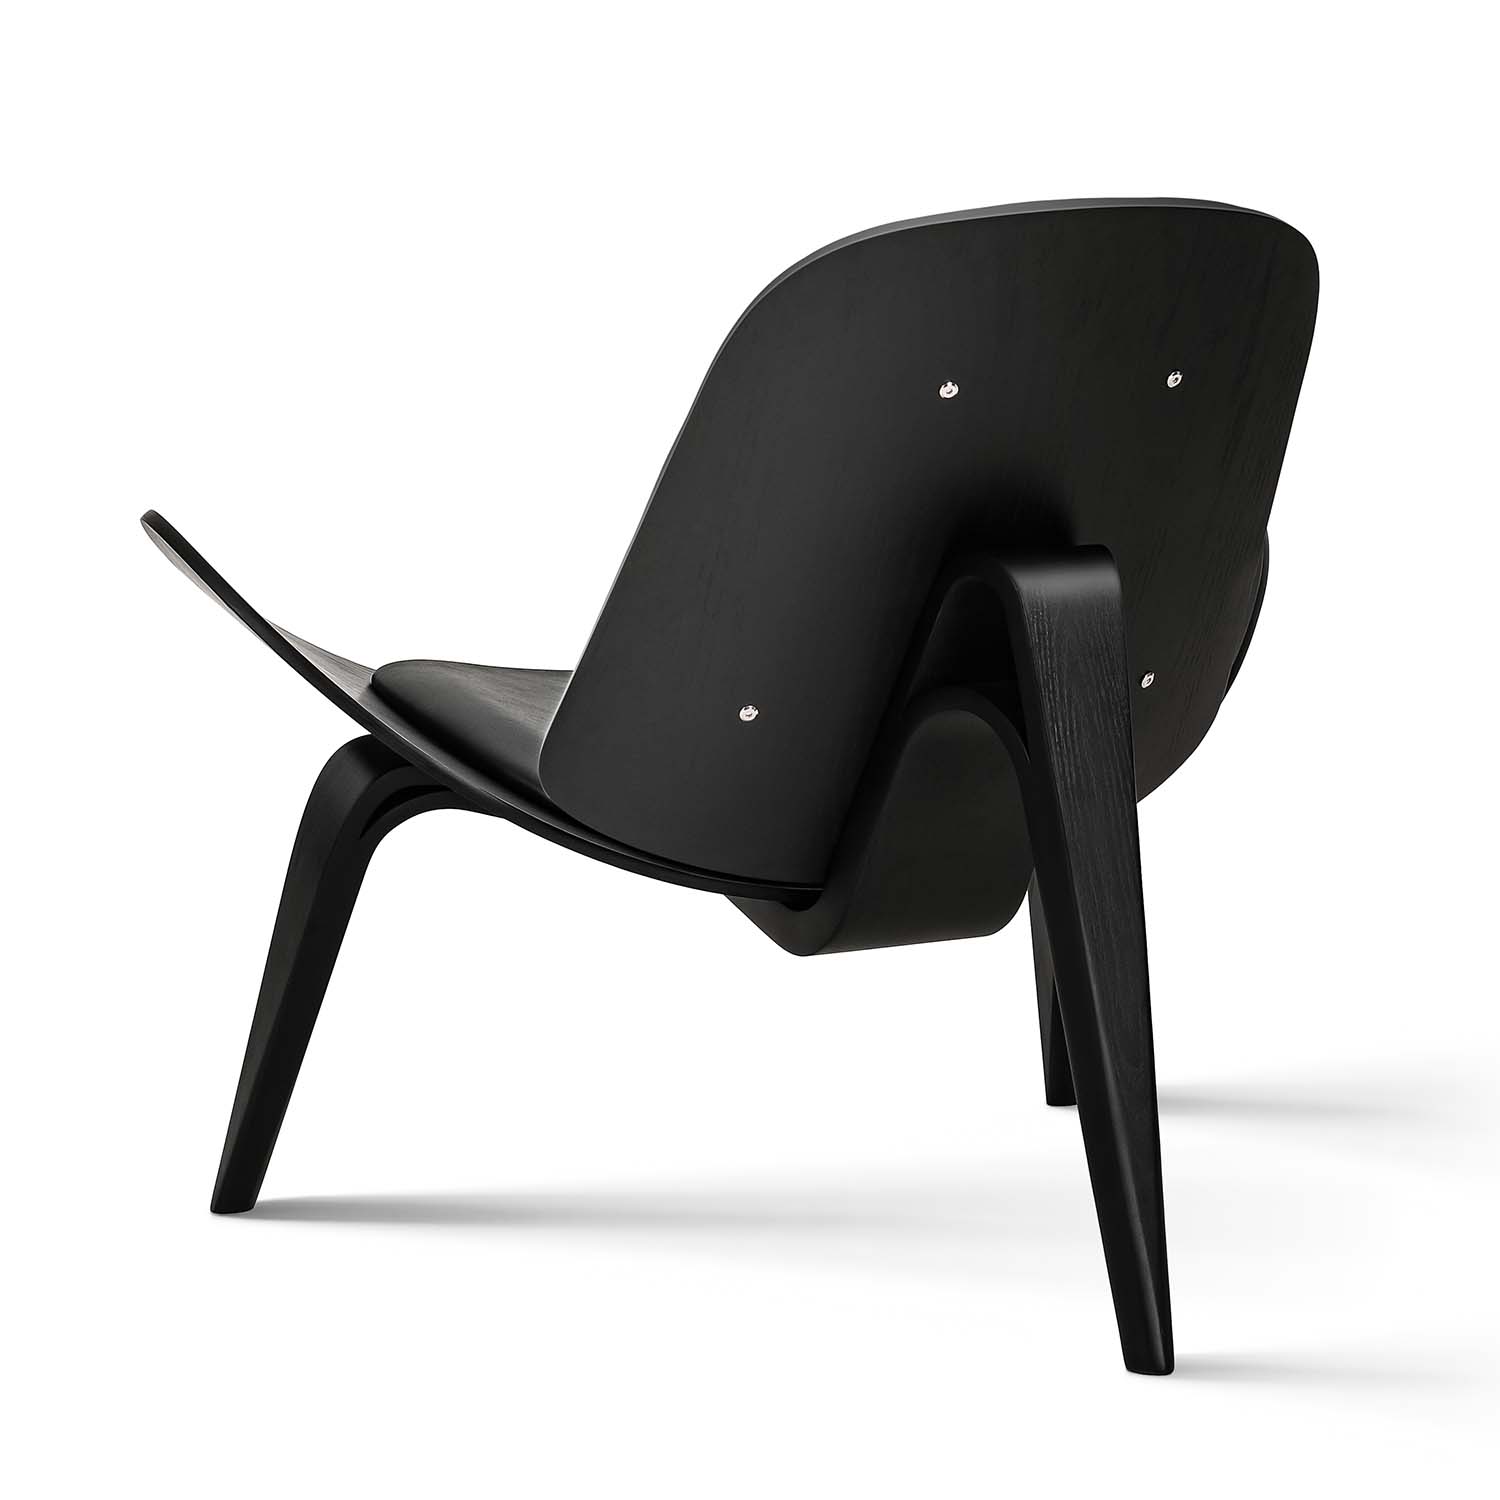 Arthia Designs - Hans Wegner's Three-Legged Shell Chair - Review